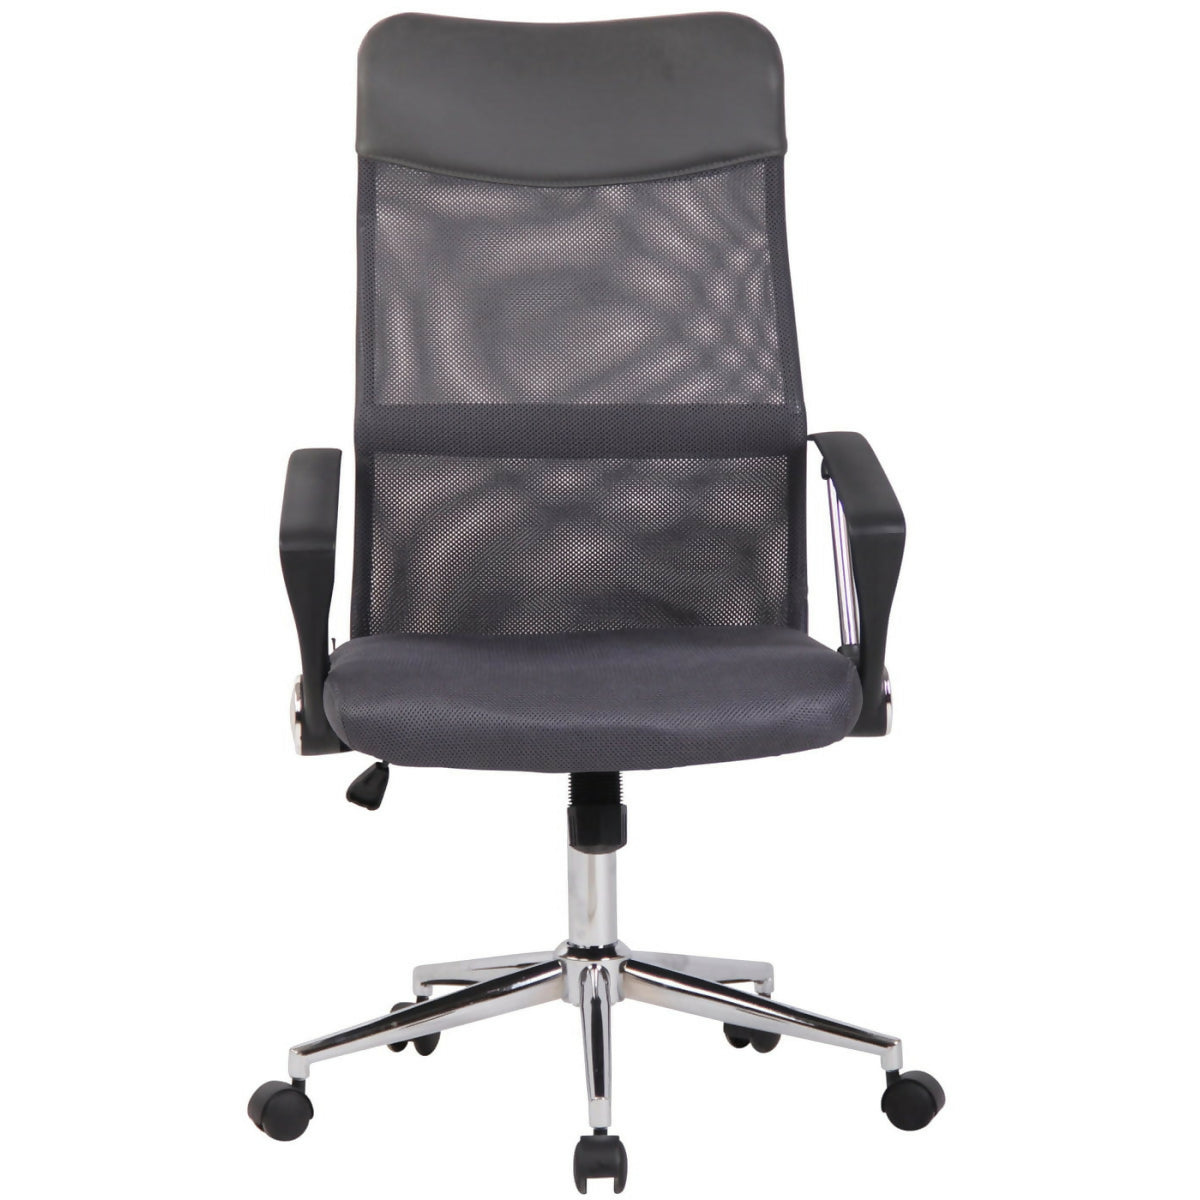 Korba office chair - Gray fabric